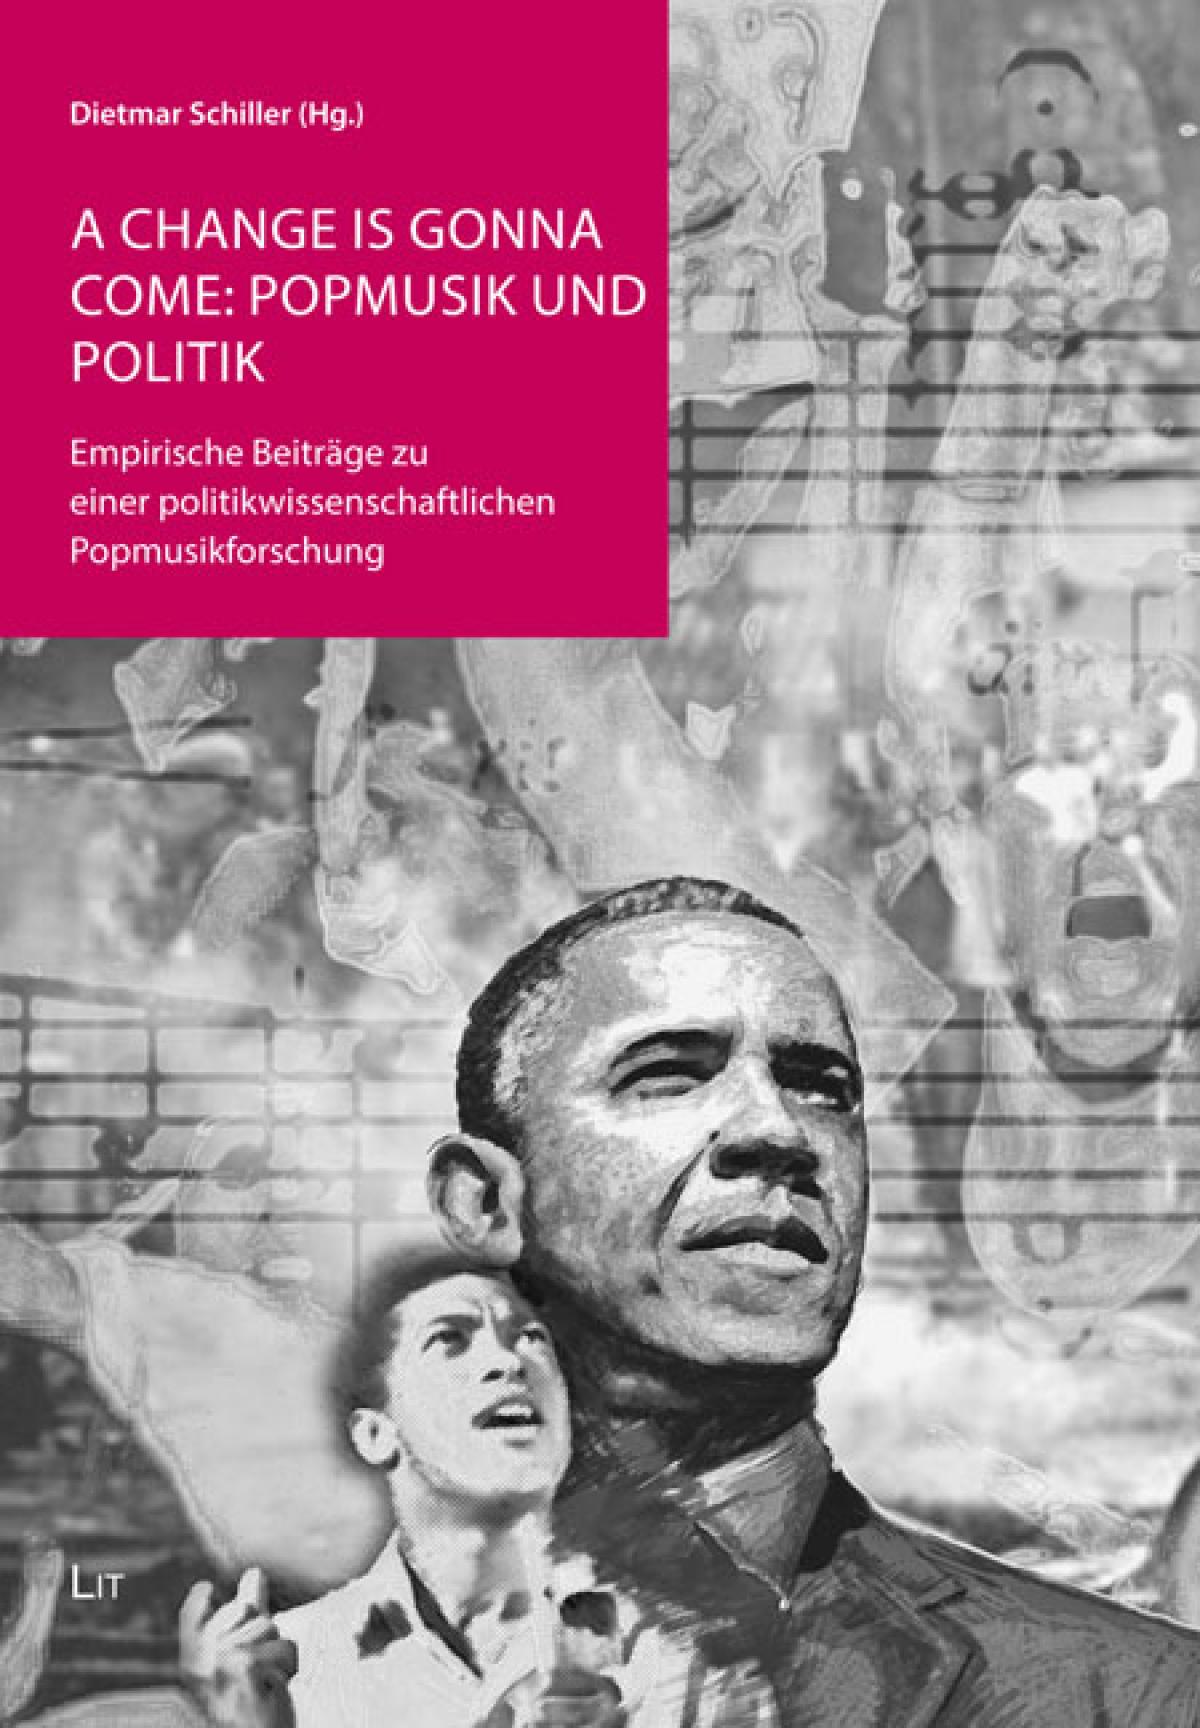 A Change Is Gonna Come: Popmusik und Politik (LIT Verlag)